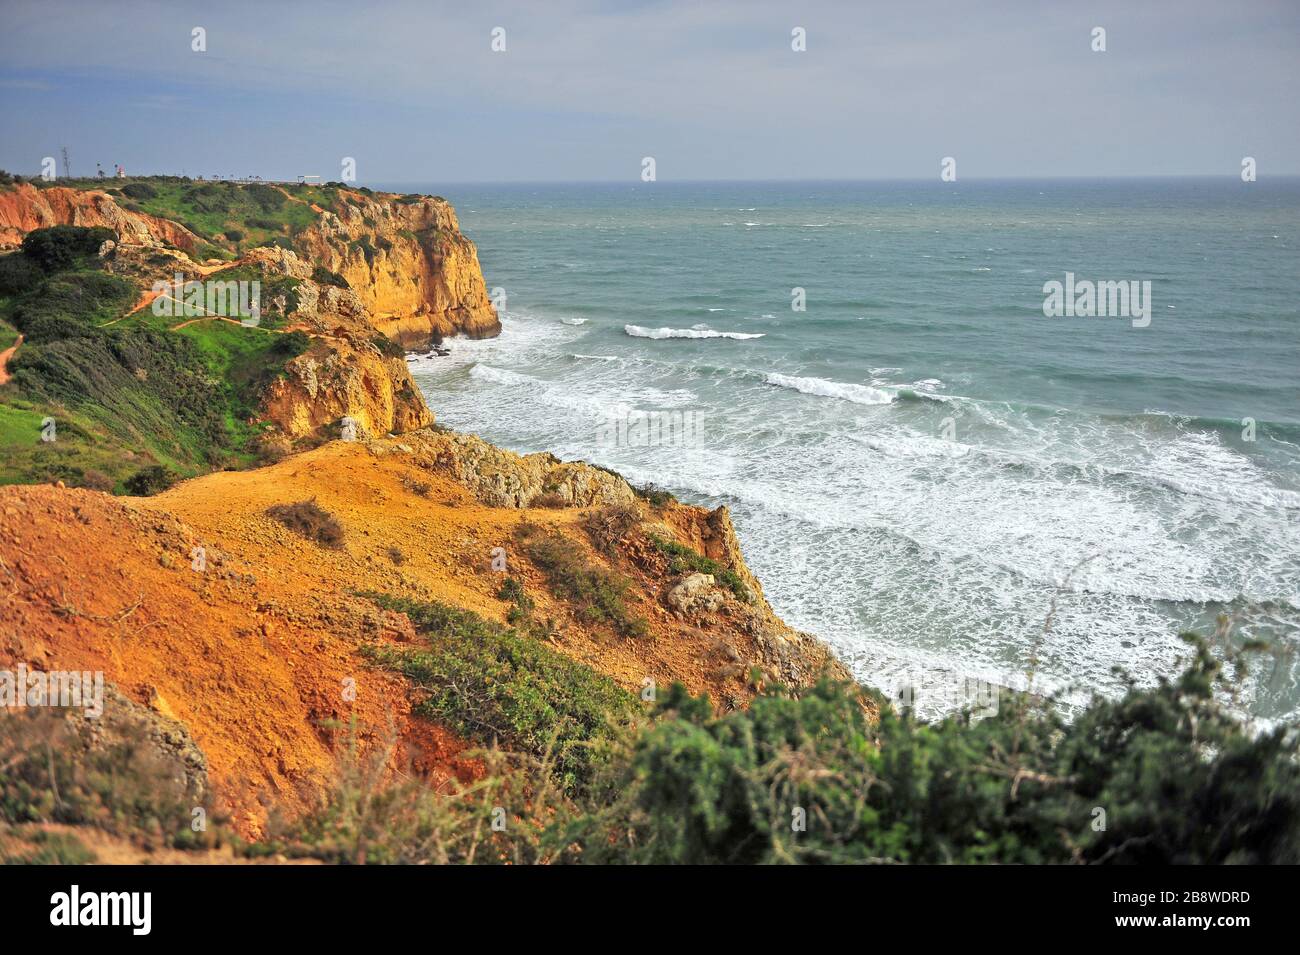 Scenic view of Atlantic coastline at Lagos, Portugal Stock Photo